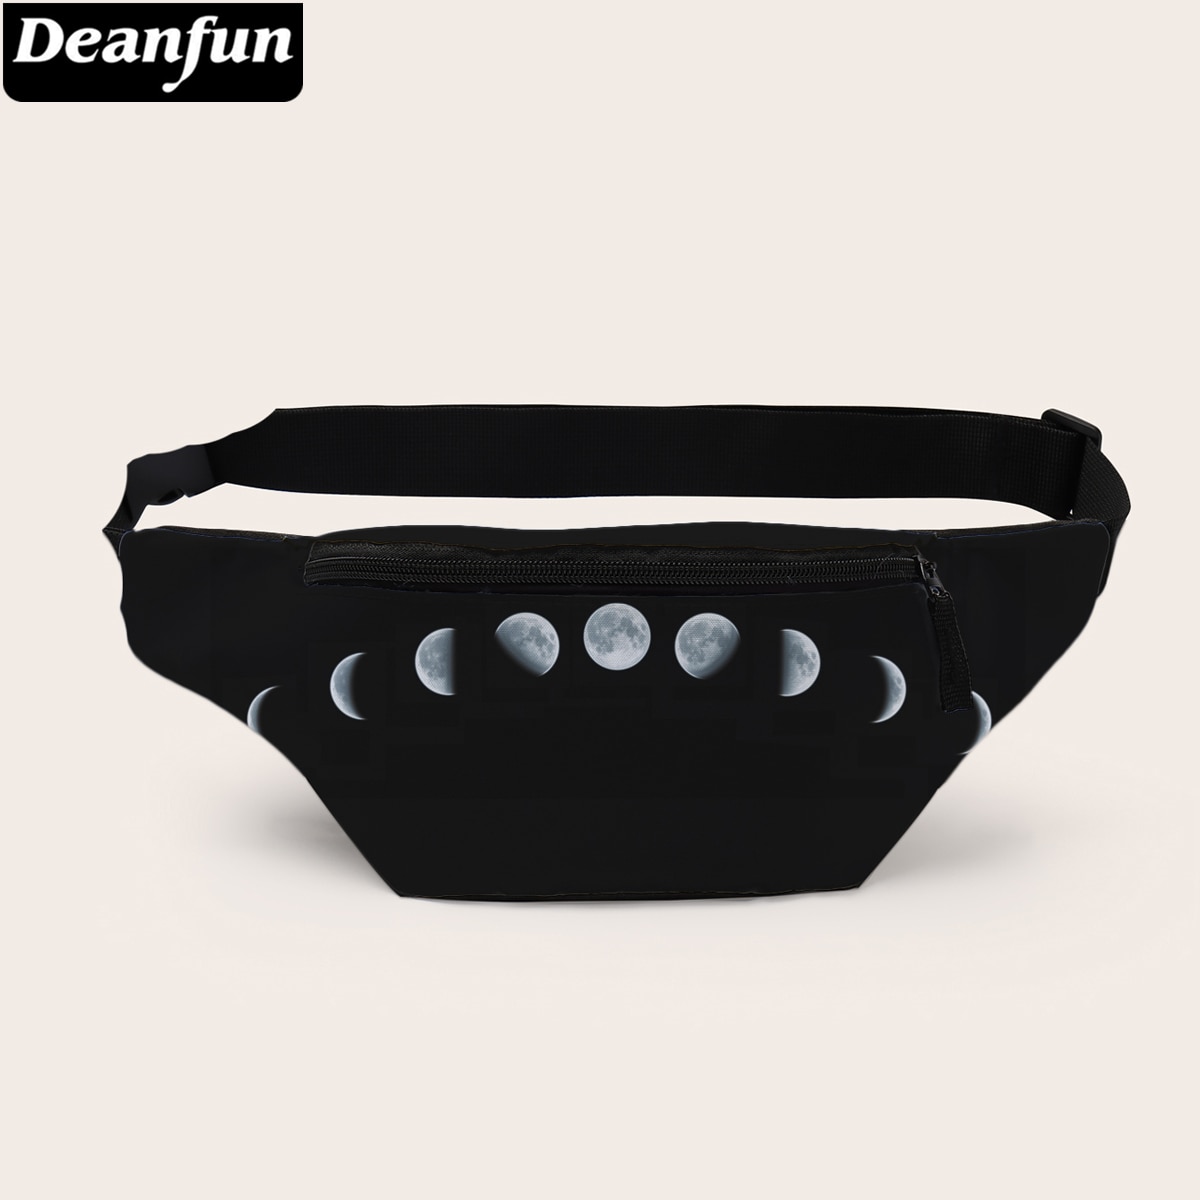 Deanfun 3D Gedrukt Taille Zakken Zwart Heuptasje Met Rits Voor Vrouwen Reizen DYB18051